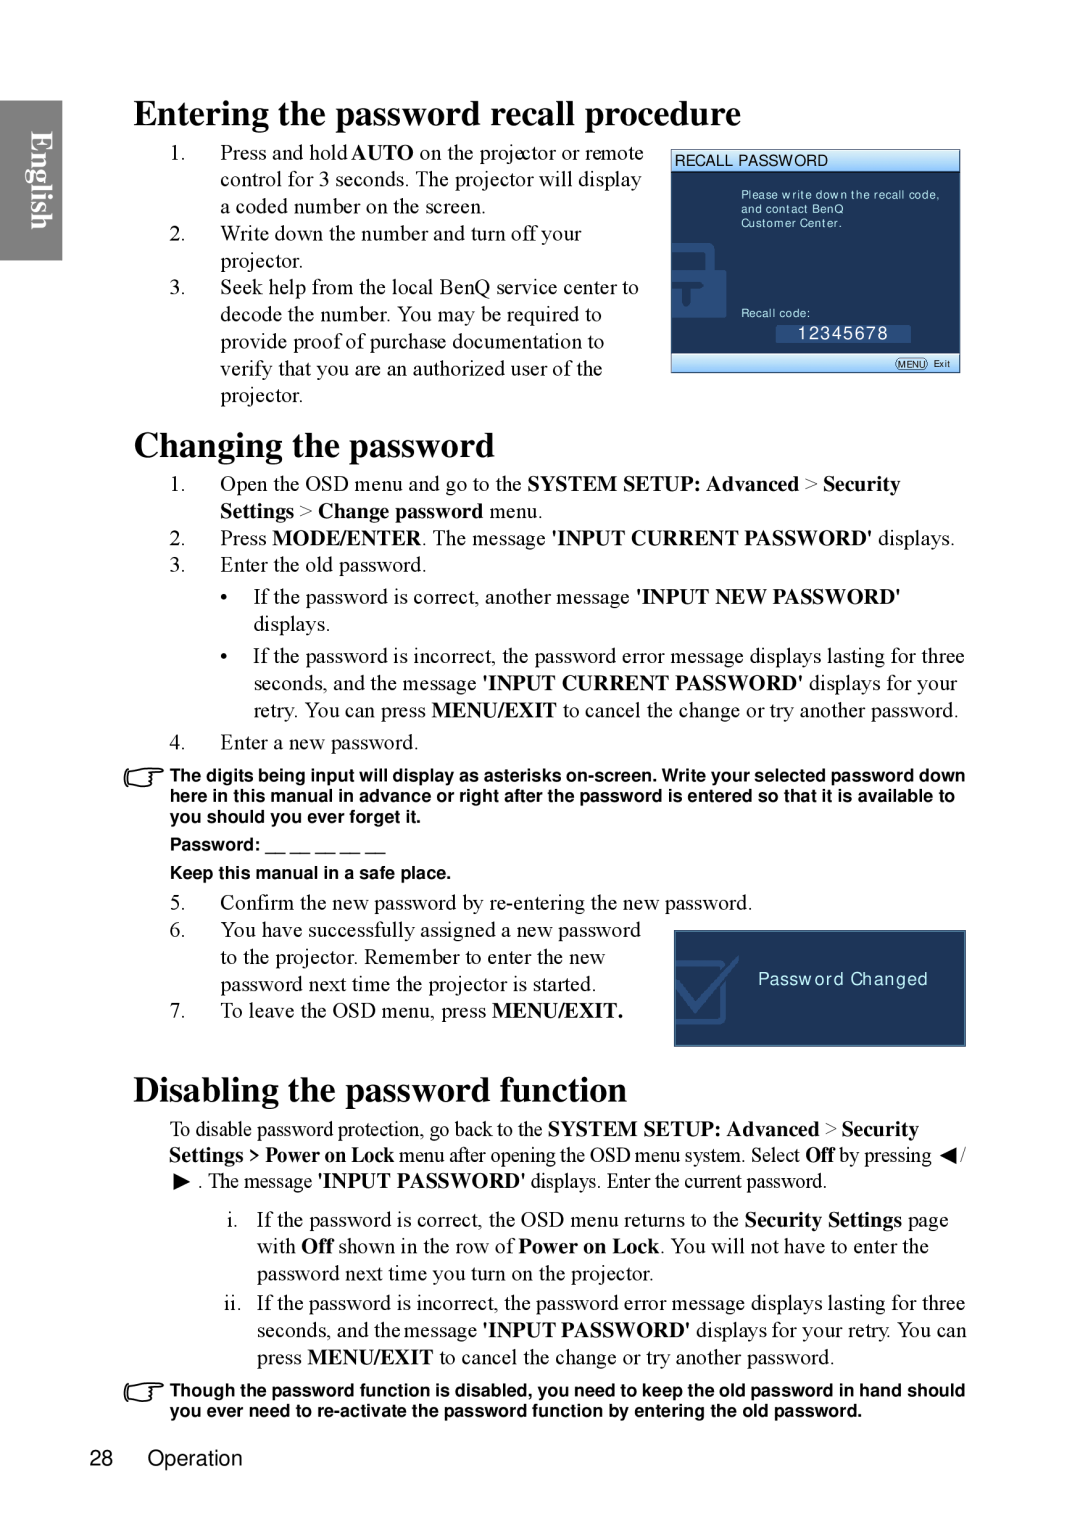 BenQ SP840 Entering the password recall procedure, Changing the password, Disabling the password function, English 